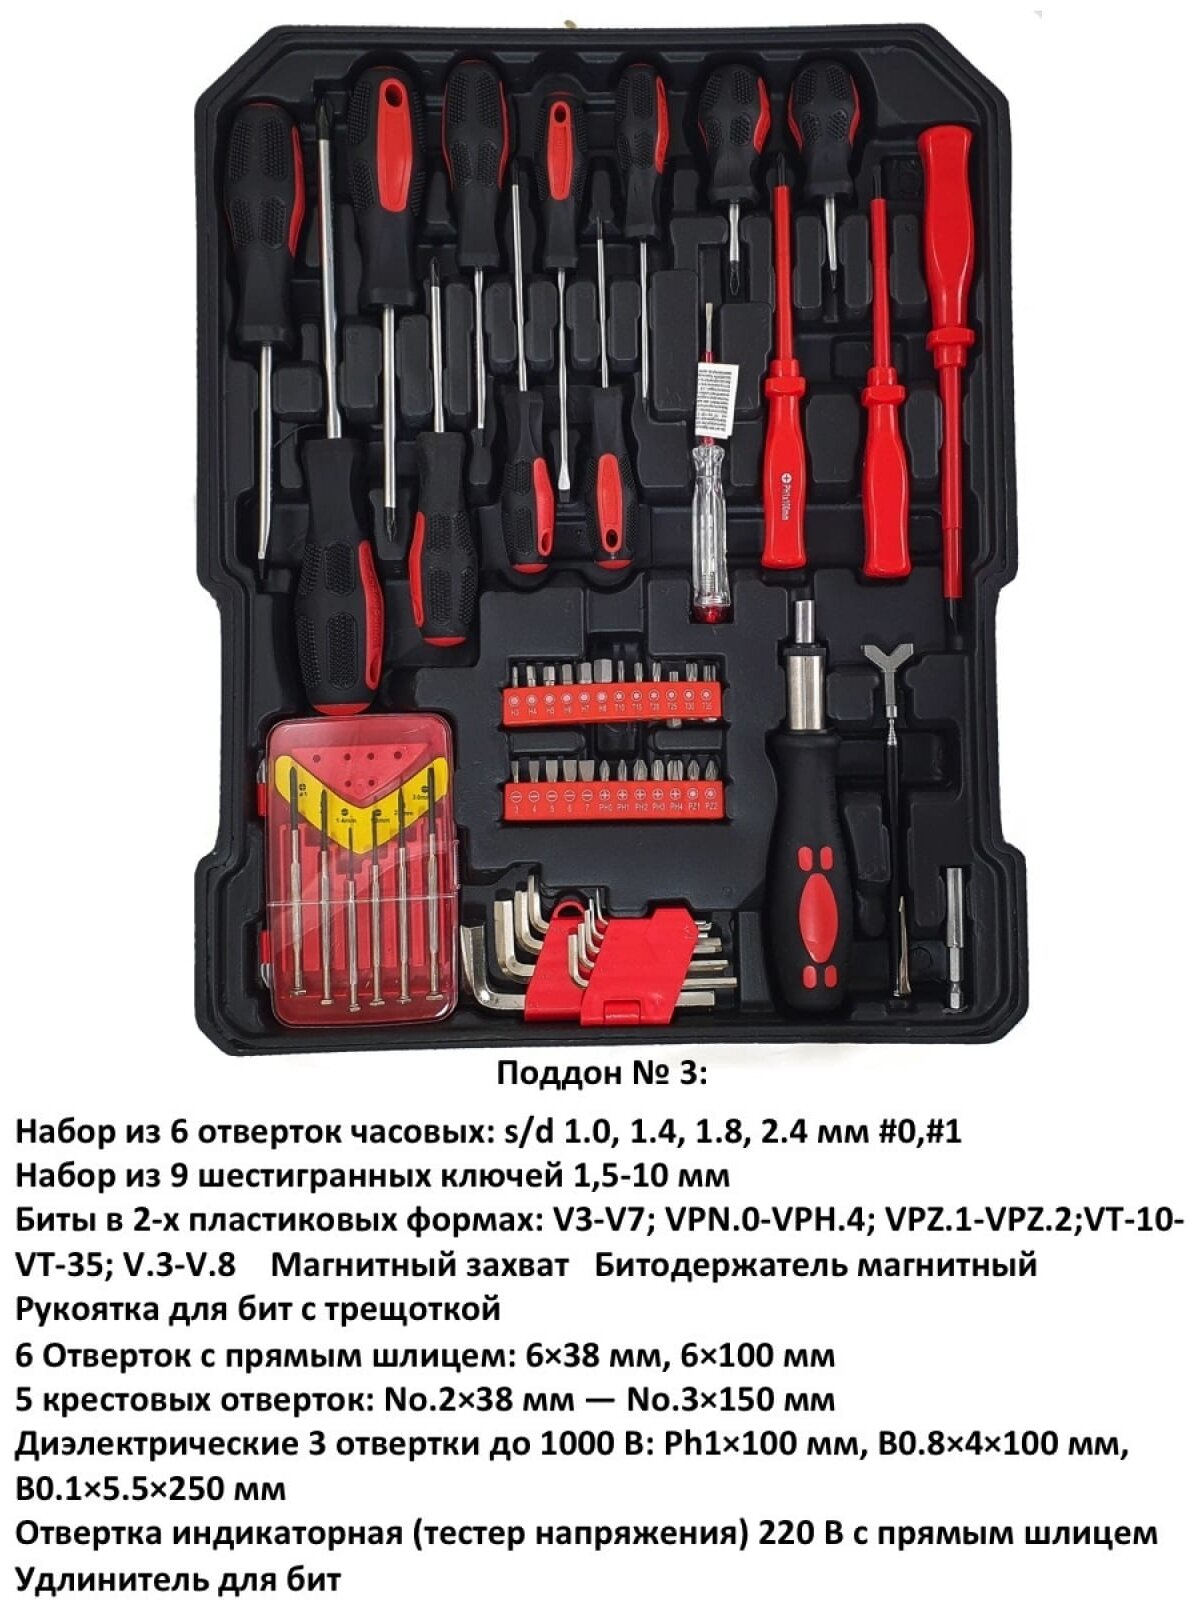 Набор инструментов в кейсе ДЕД макар 187 предметов МК187-097 - фотография № 5